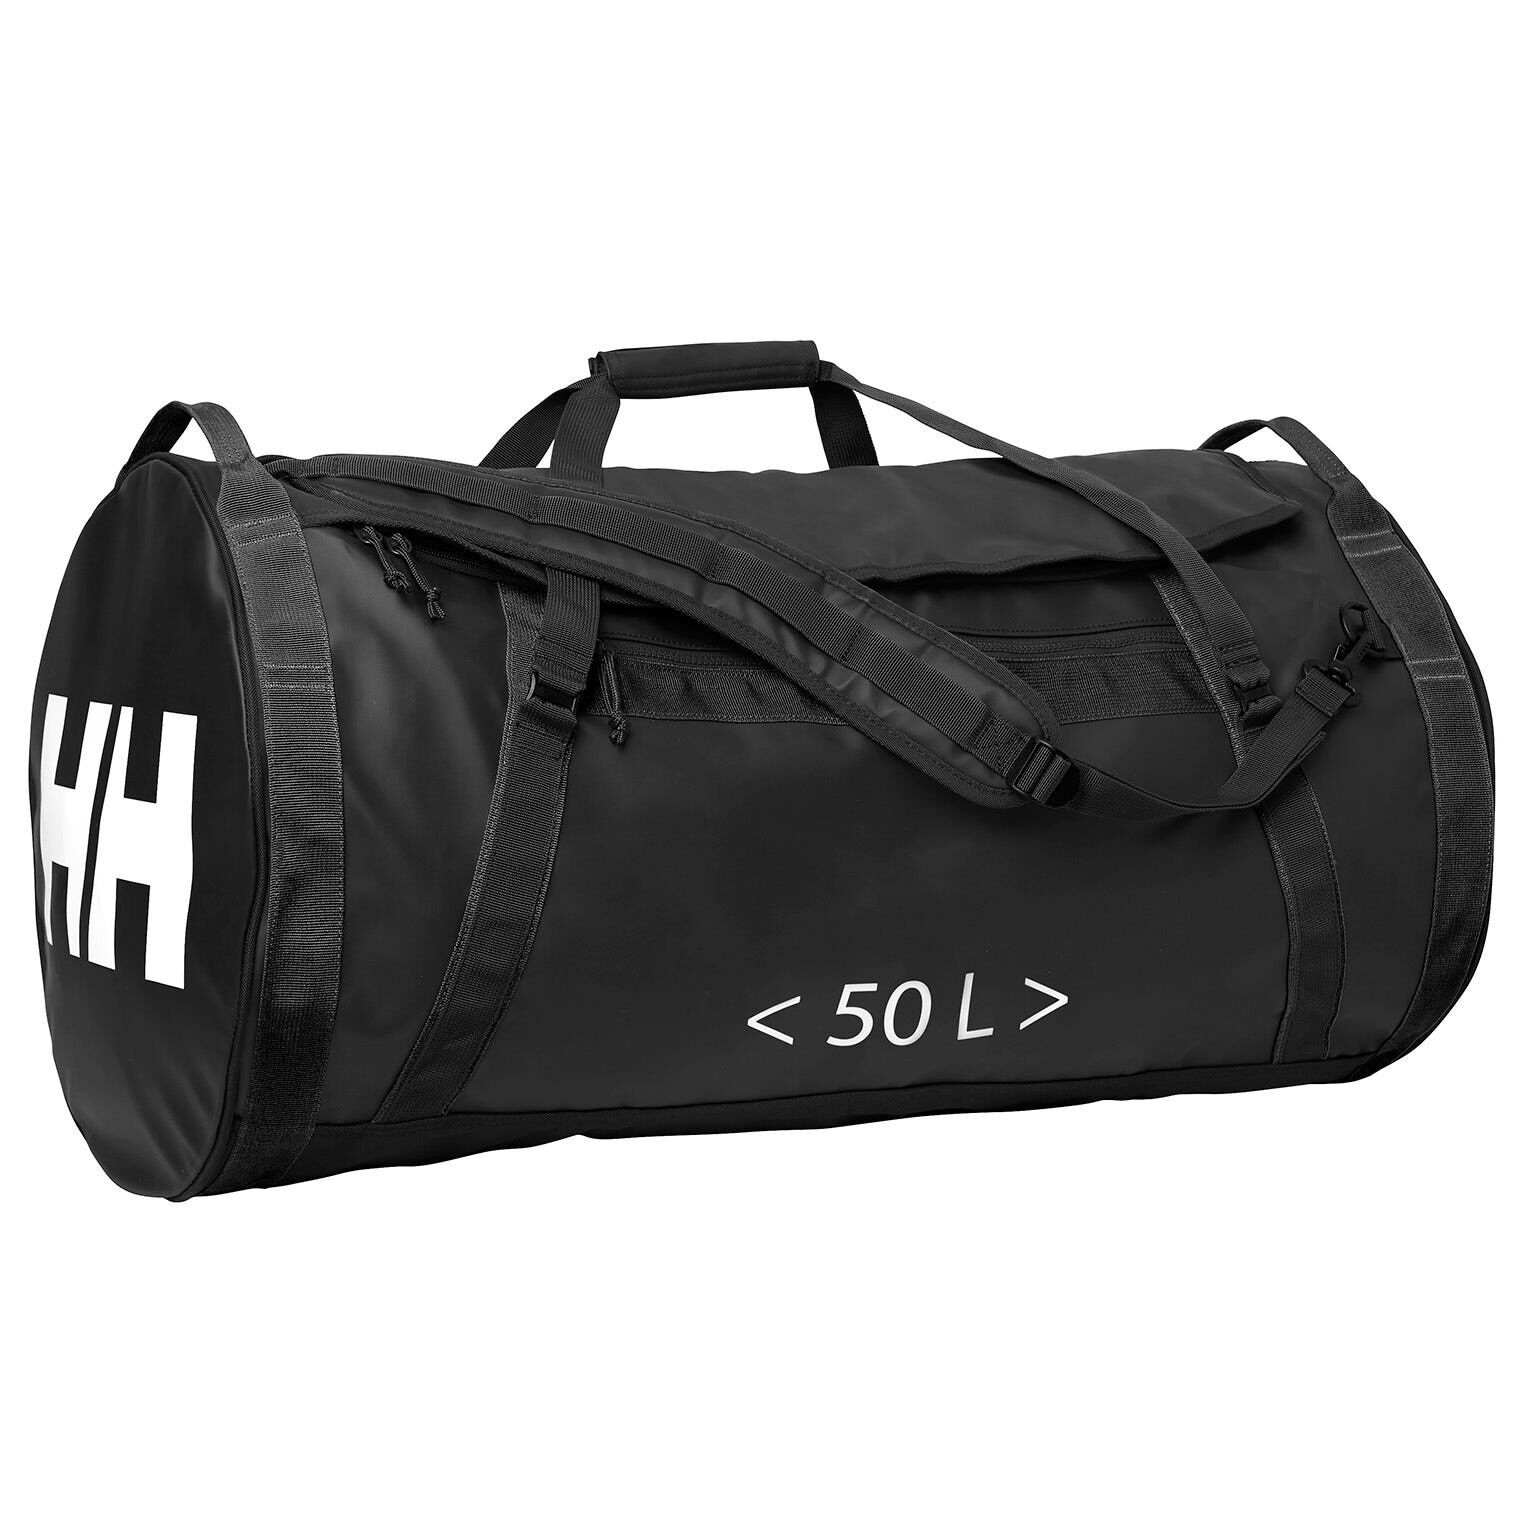 Helly Hansen HH Duffel Bag 2 50L - Travel bag